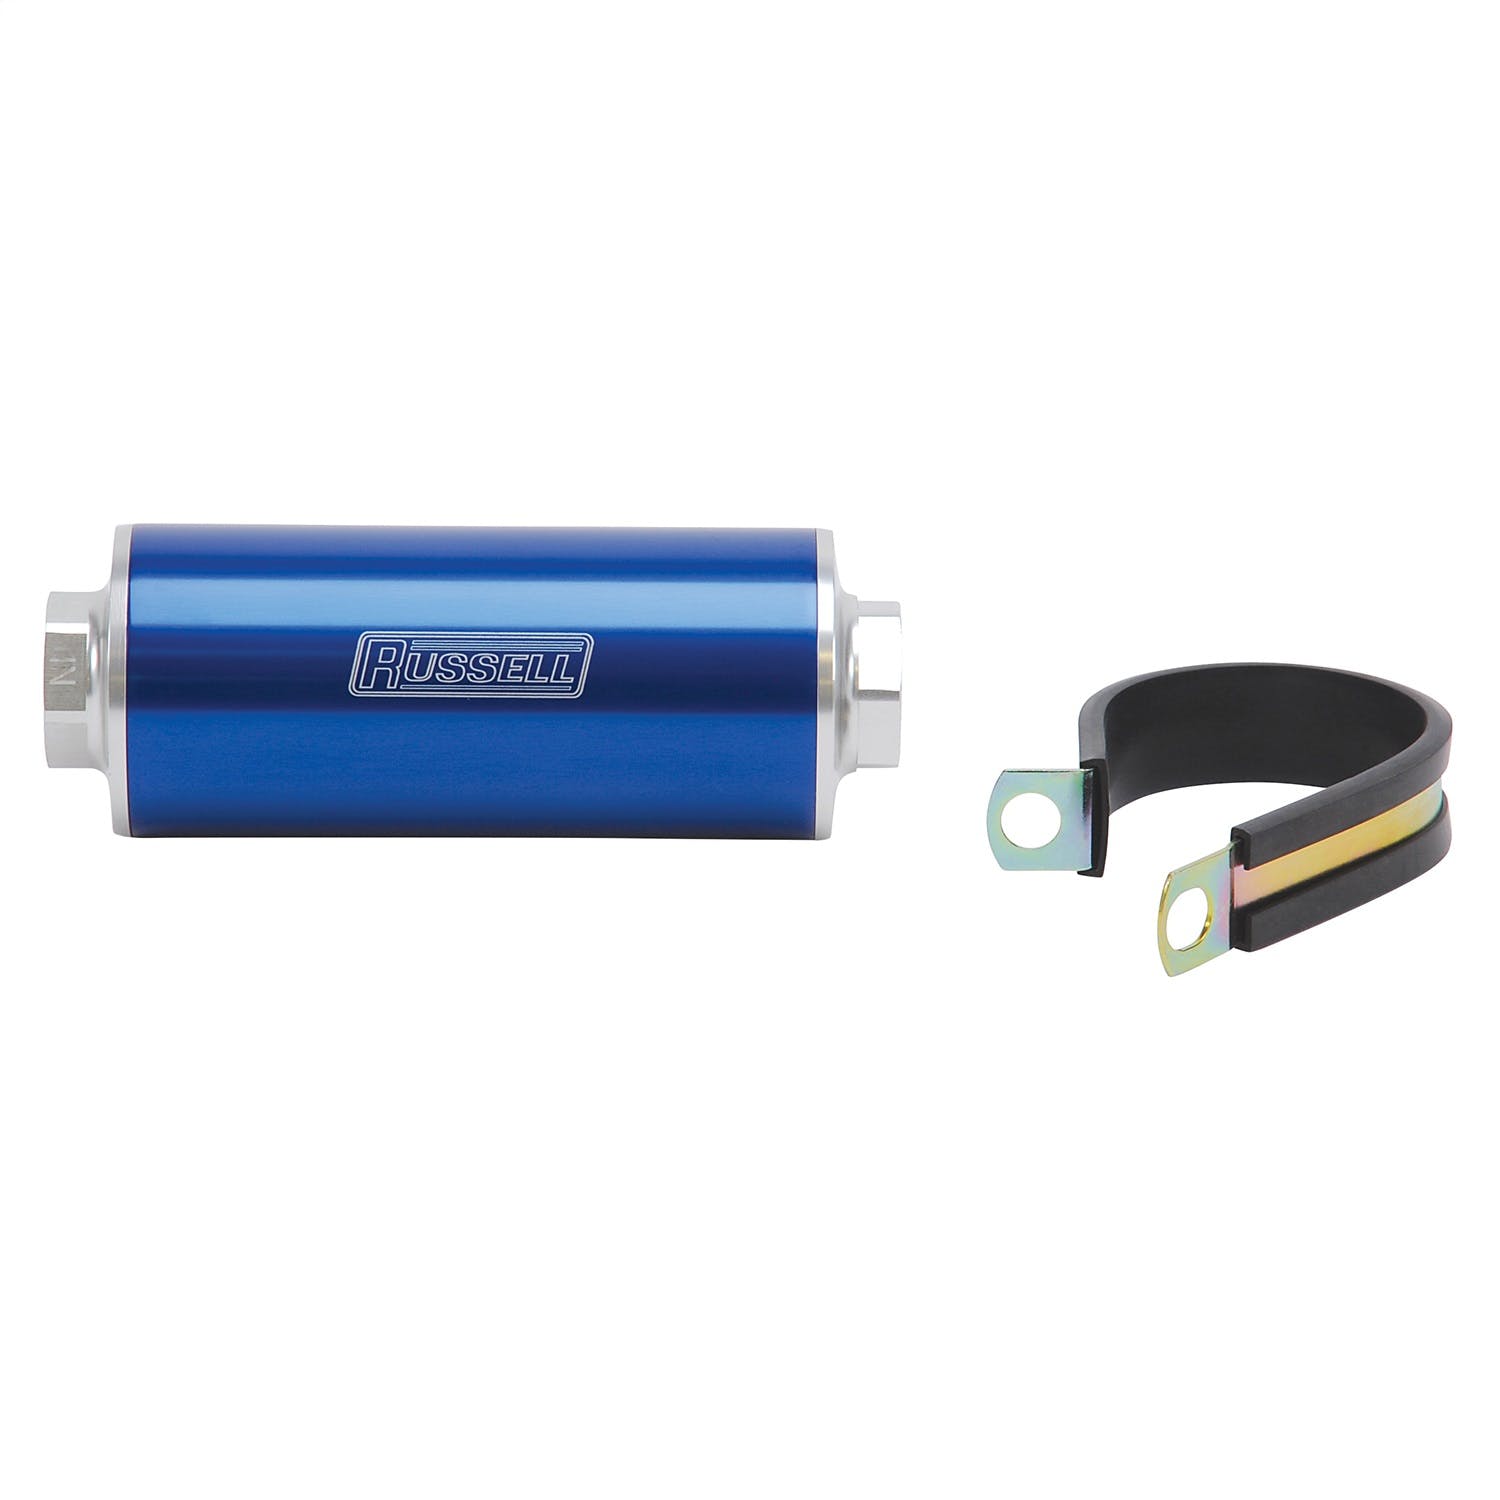 Russell 649262 Fuel filter, Profilter, 6” long, 60 Micron, #10 AN Inlet/#10 AN Outlet, Blu